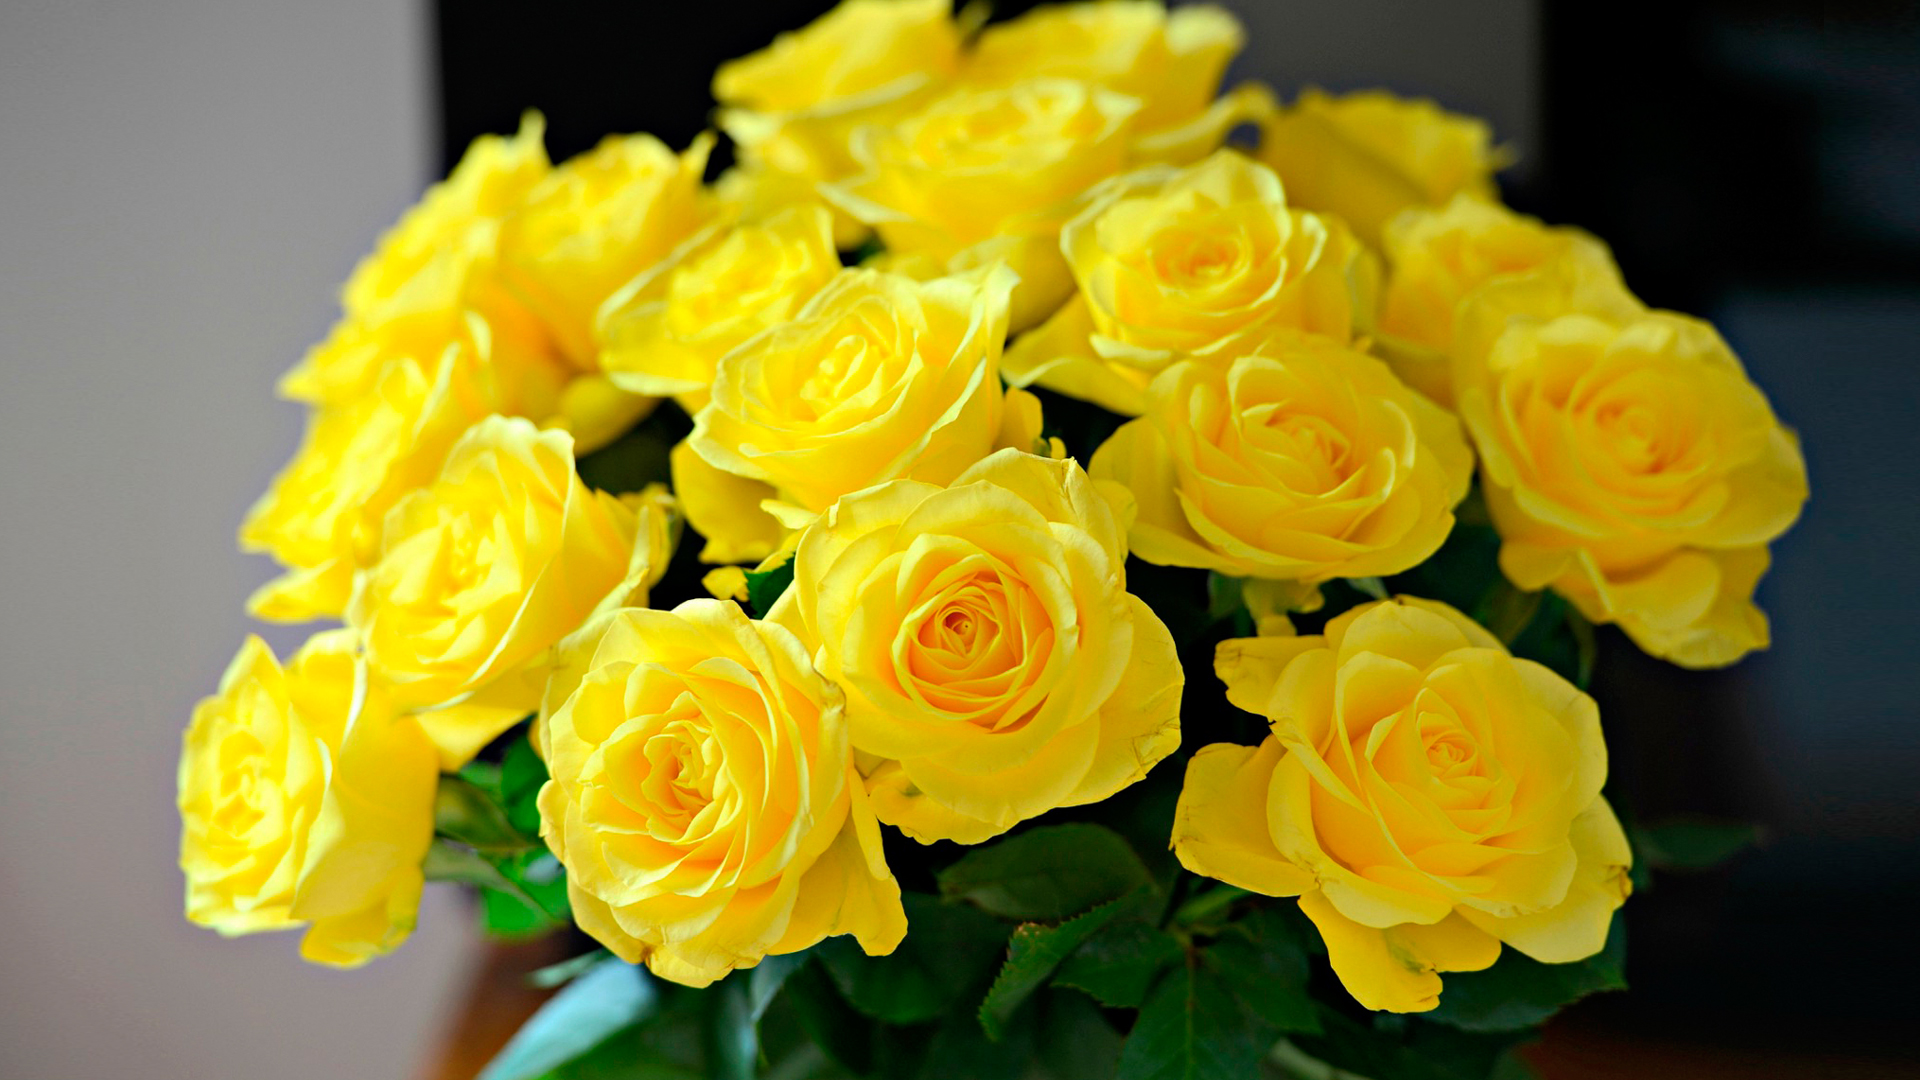 Yellow Rose Flower Arrangements in Vase - HD Wallpapers | Wallpapers ...